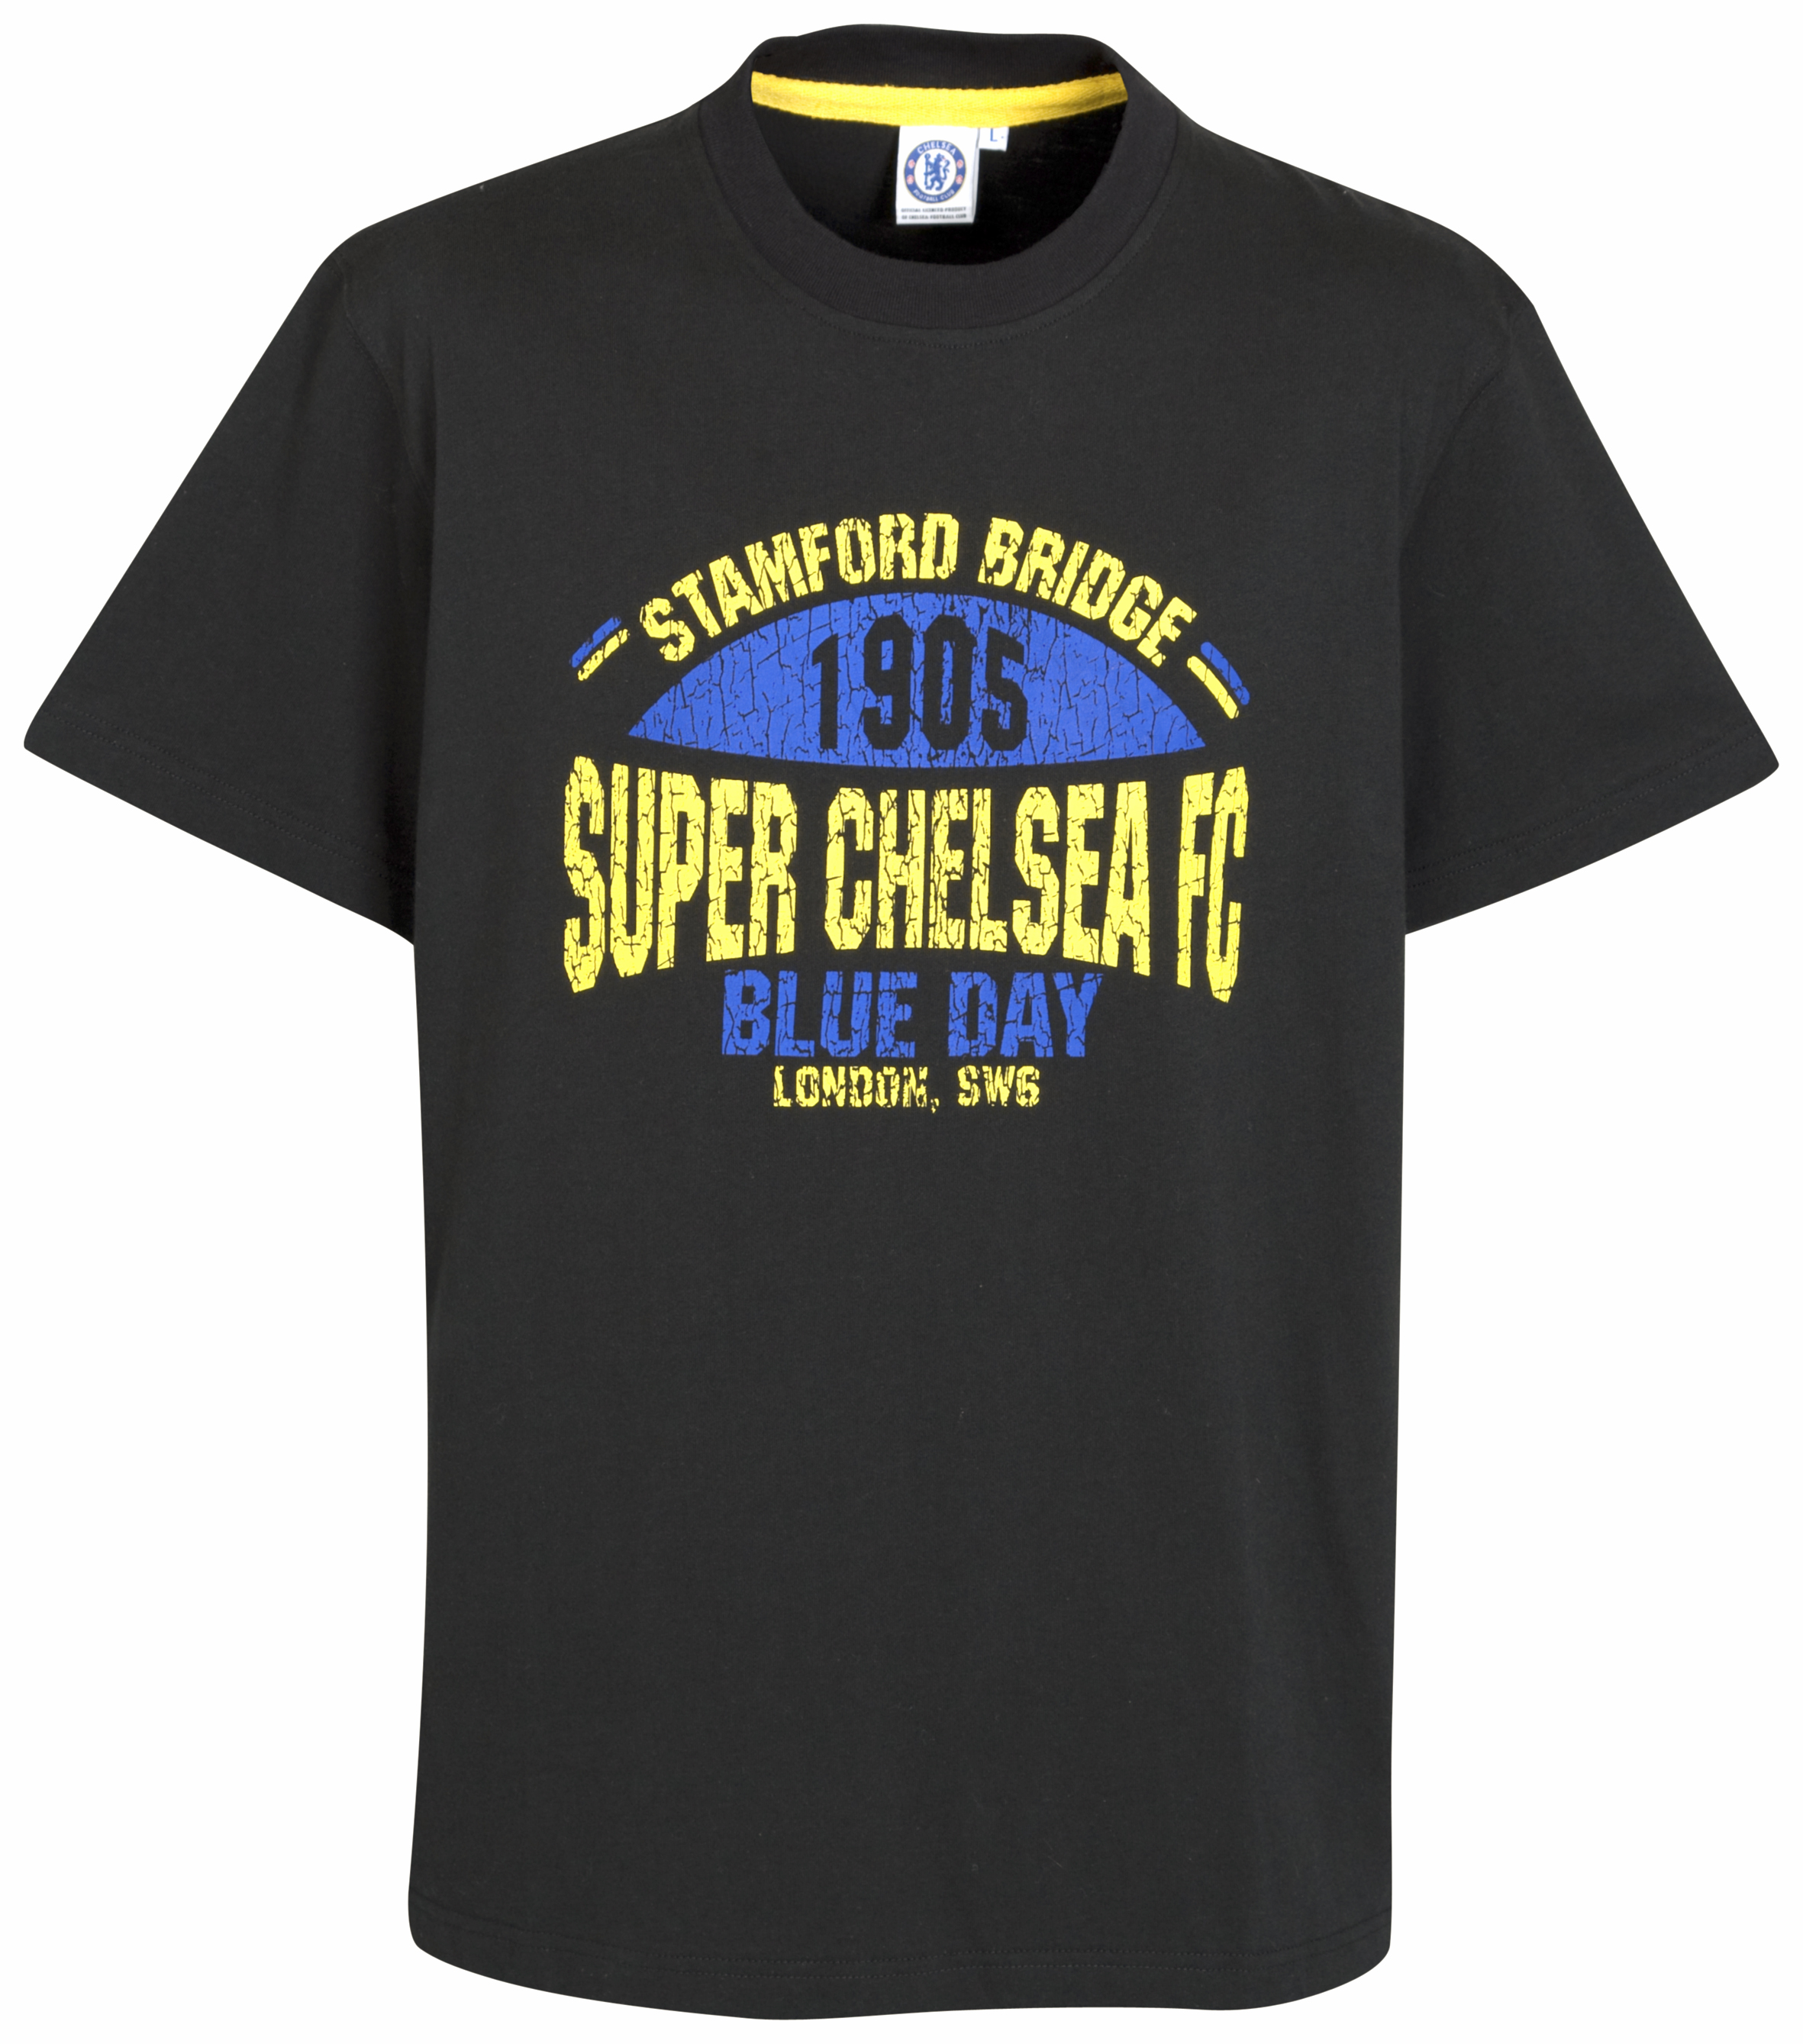 Chelsea Super Chelsea retro Graphic T Shirt Black